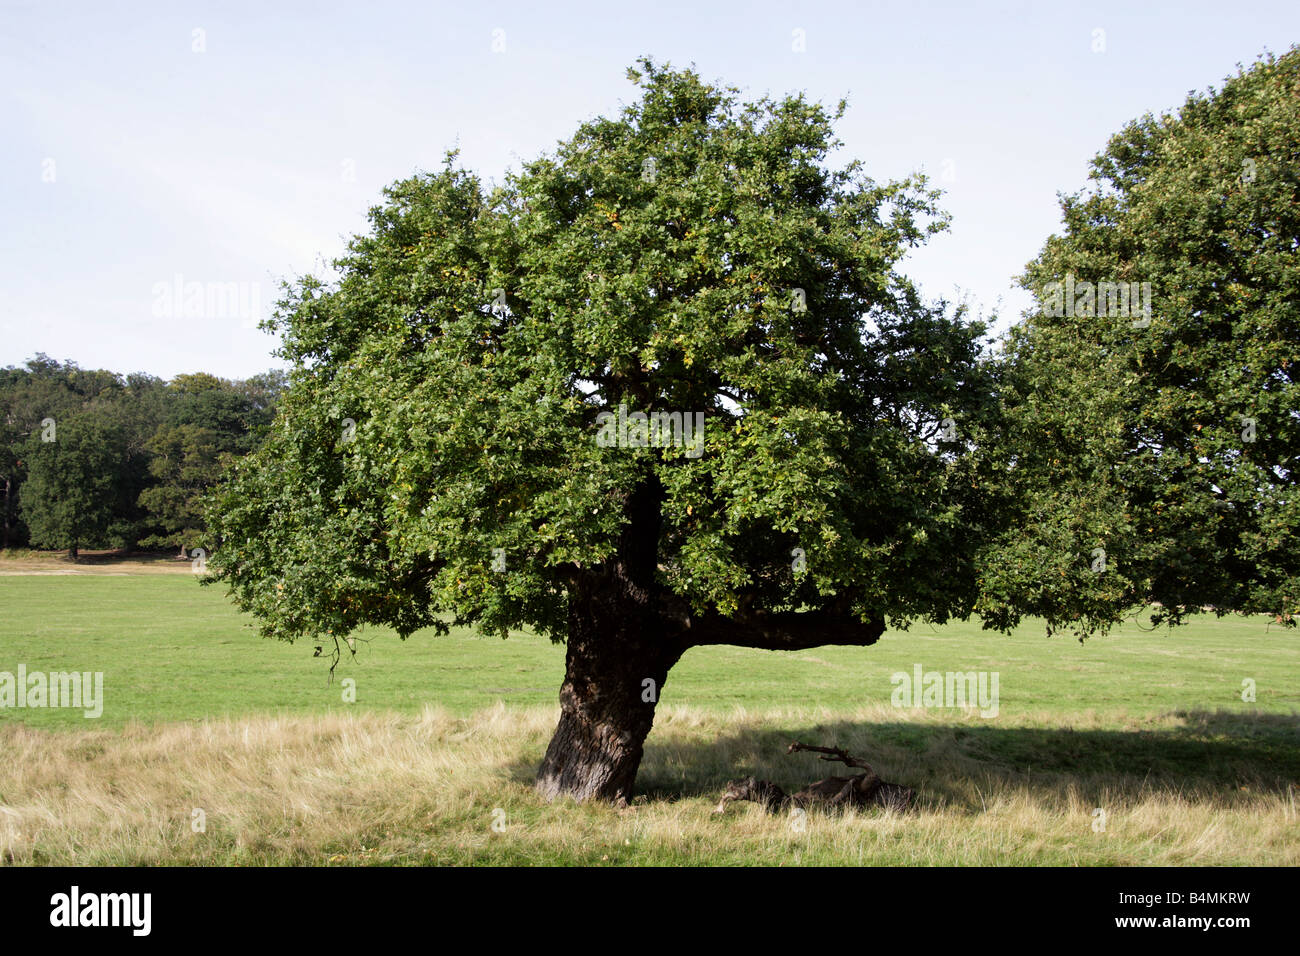 Country Landscape with Old Oak Tree. Pedunculate or English Oak, Quercus robur, Fagaceae Stock Photo